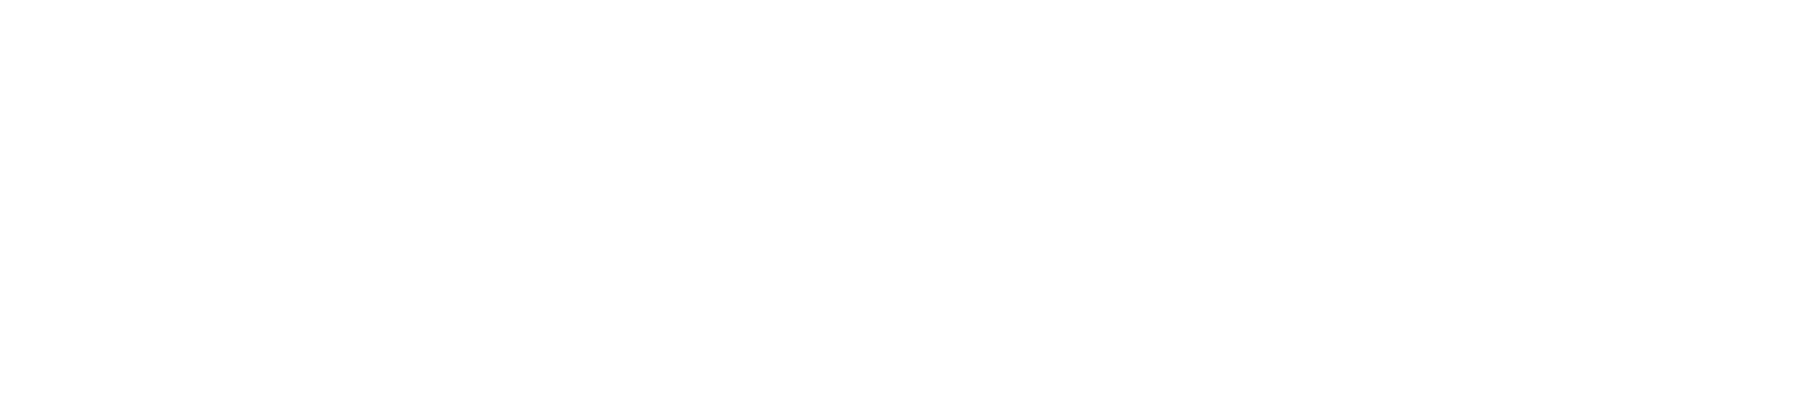 Florida Multicultural District